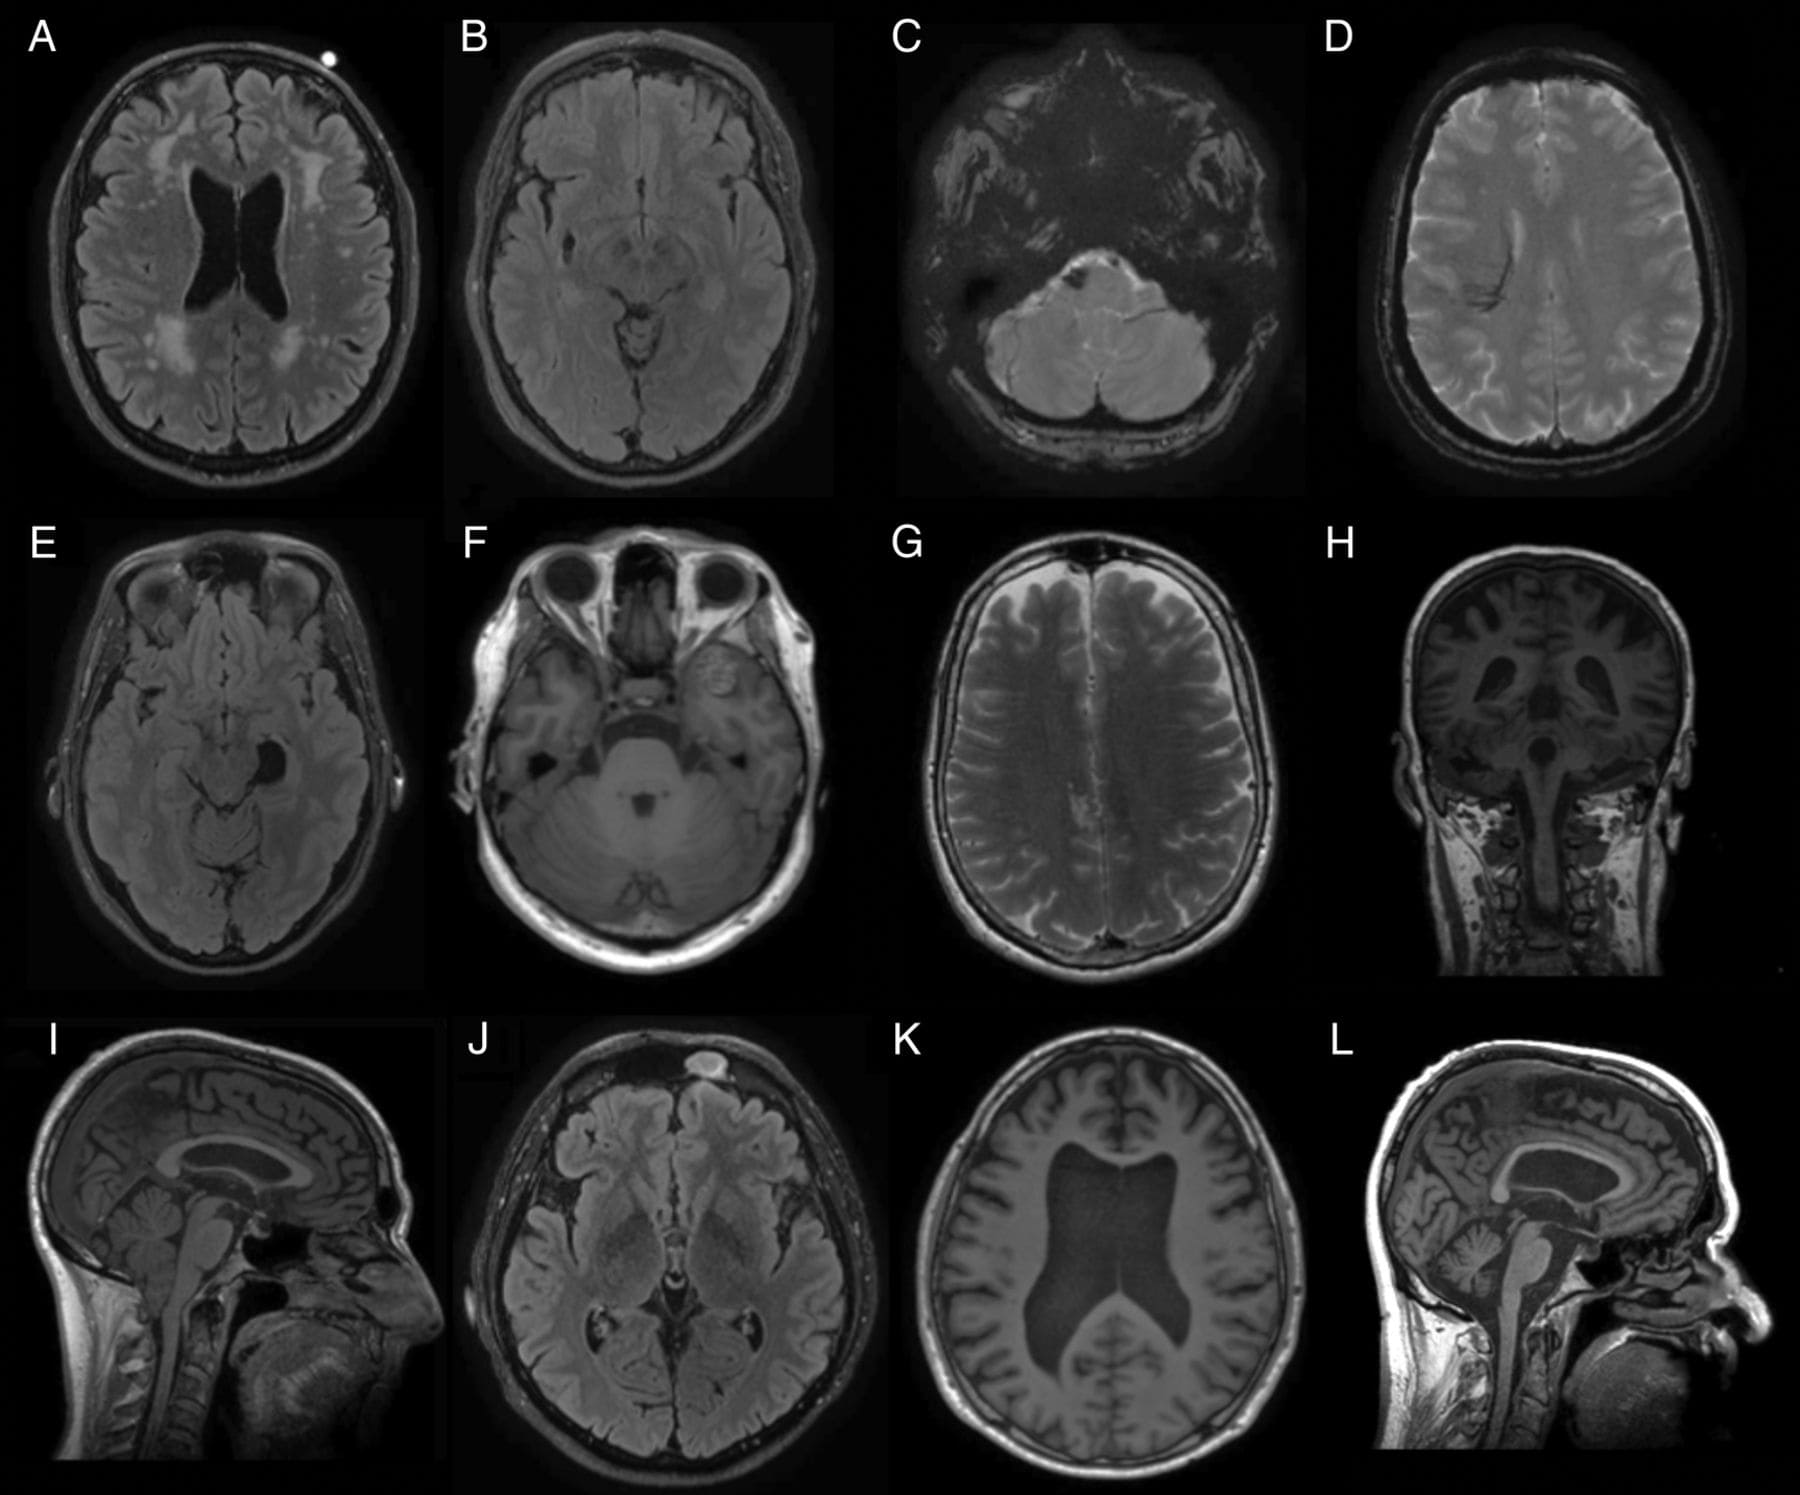 Мрт головного мозга санкт петербург. Кт томограмма головного мозга. Компьютерная томография кт головного мозга. Рентгеновская компьютерная томография головного мозга. Магнито-резонансная томография головного мозга.